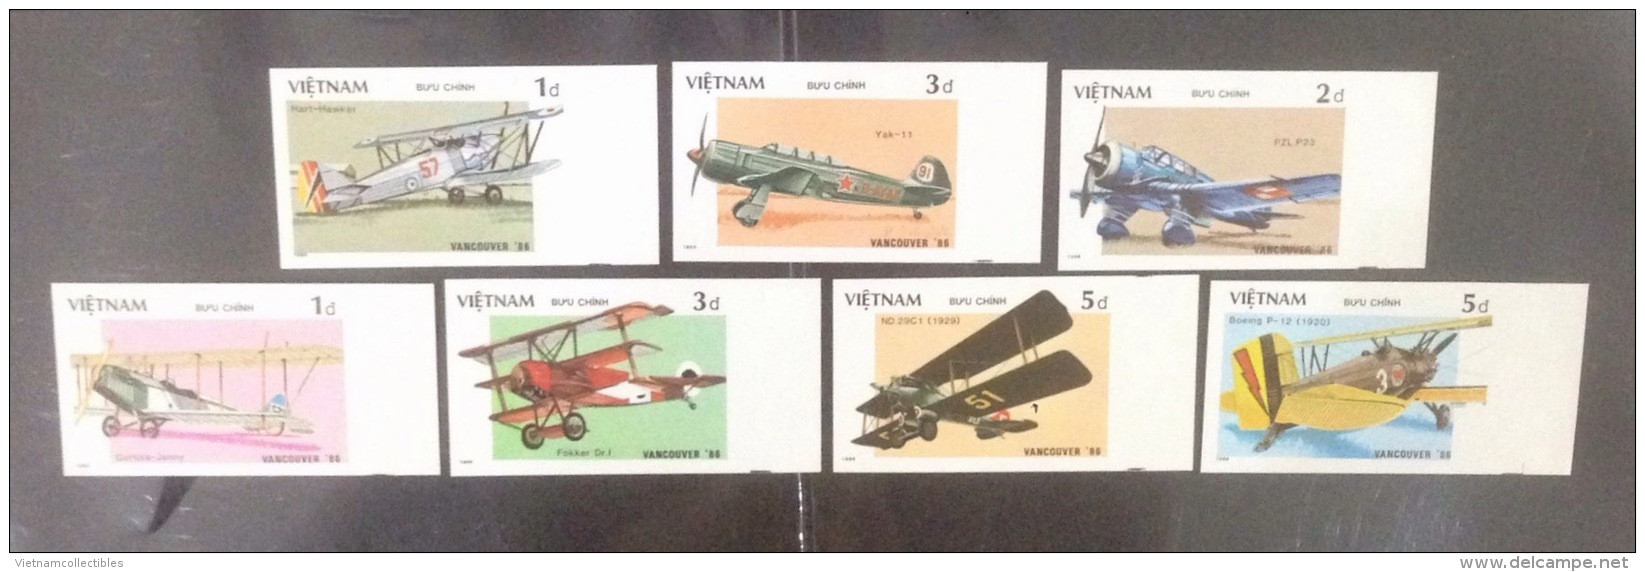 Vietnam Viet Nam MNH Imperf Stamps 1986 : "EXPO-86" World Fair Vancouver - Canada / Ancient Airplane (Ms491) - Vietnam